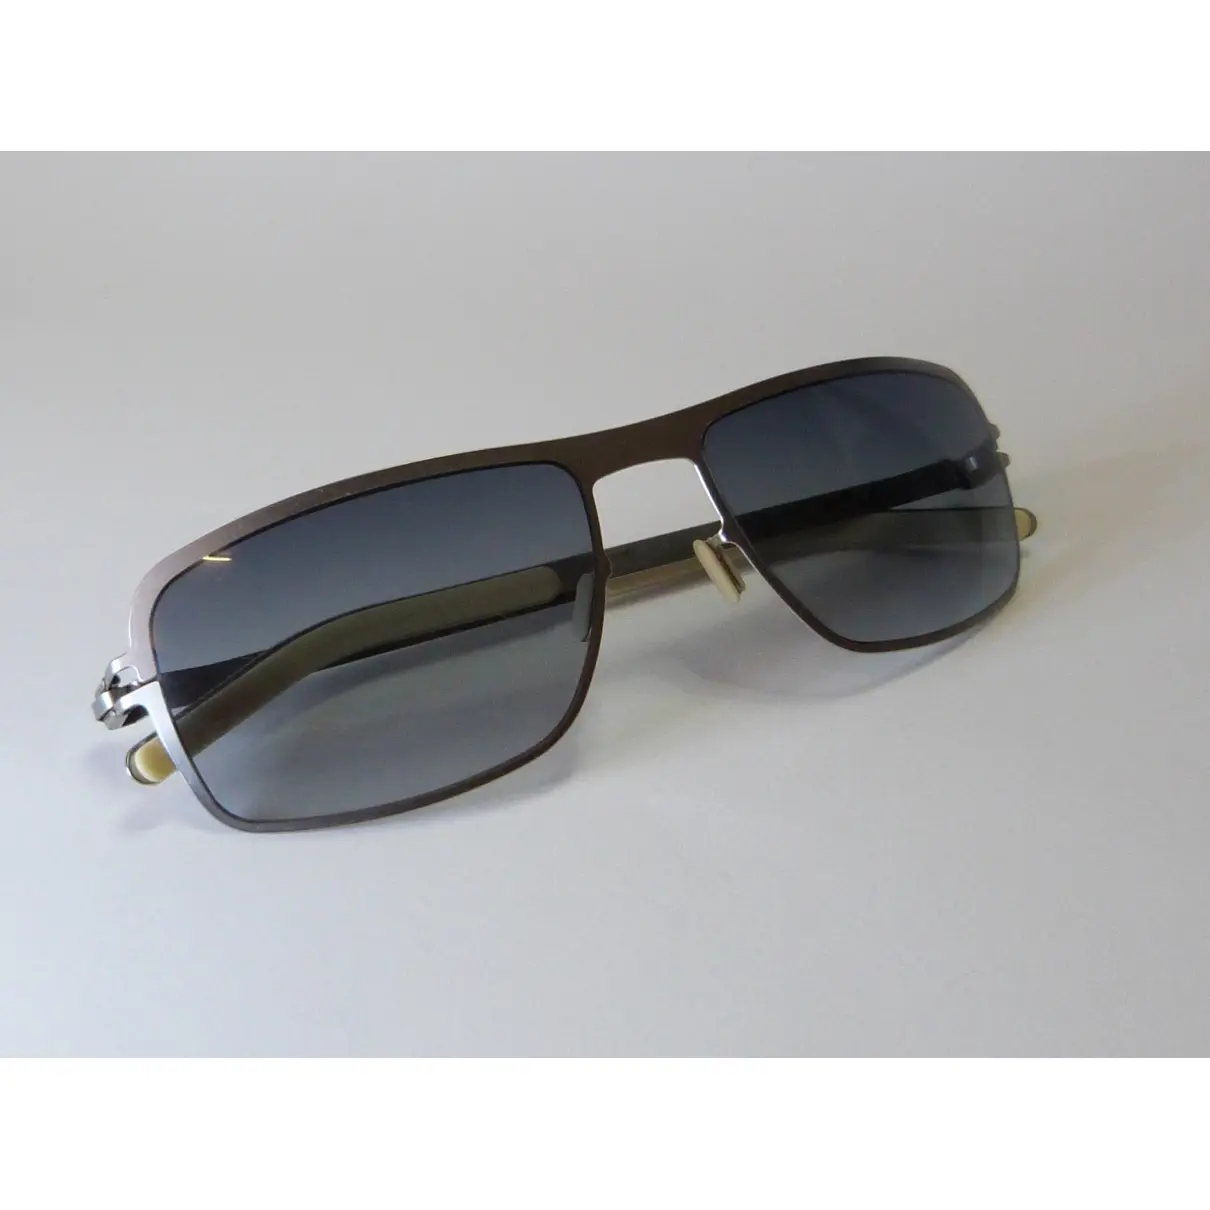 Mykita Sunglasses for sale